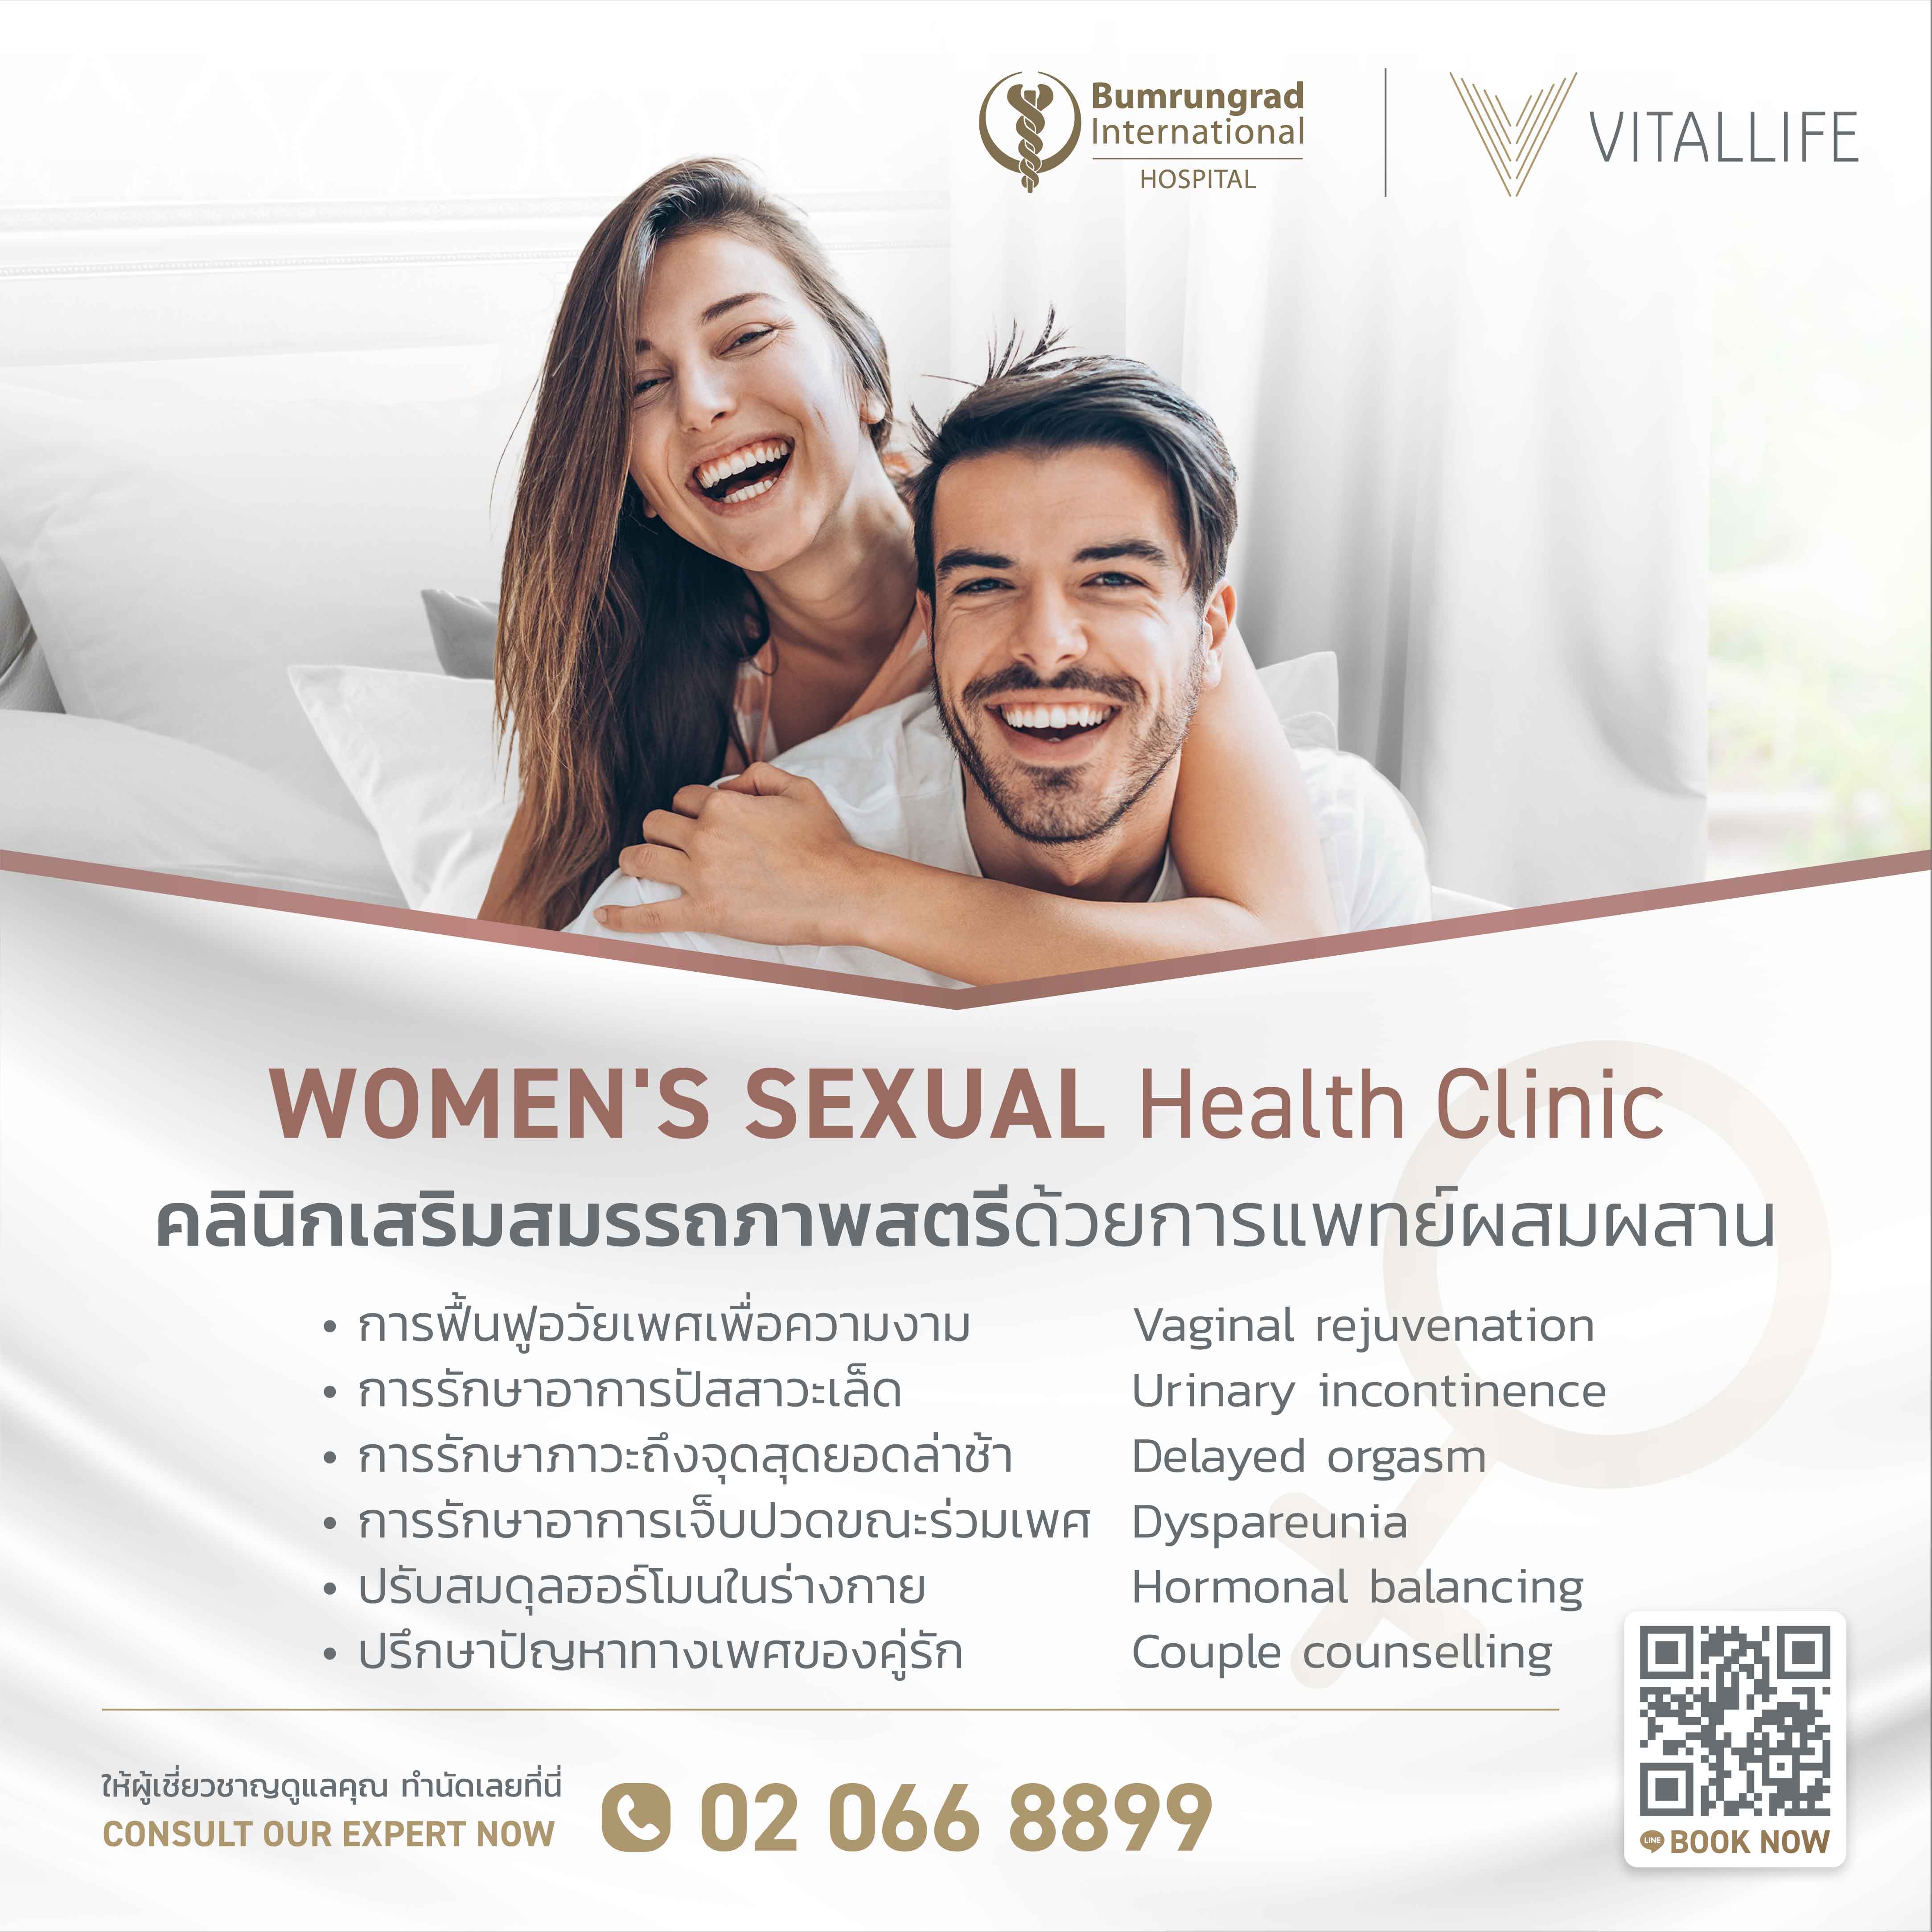 220805_VitalLife_Sexual-Health-Clinic_Social-Post_1040x1040px_Final_CO_CS6_AW-02-(1).jpg